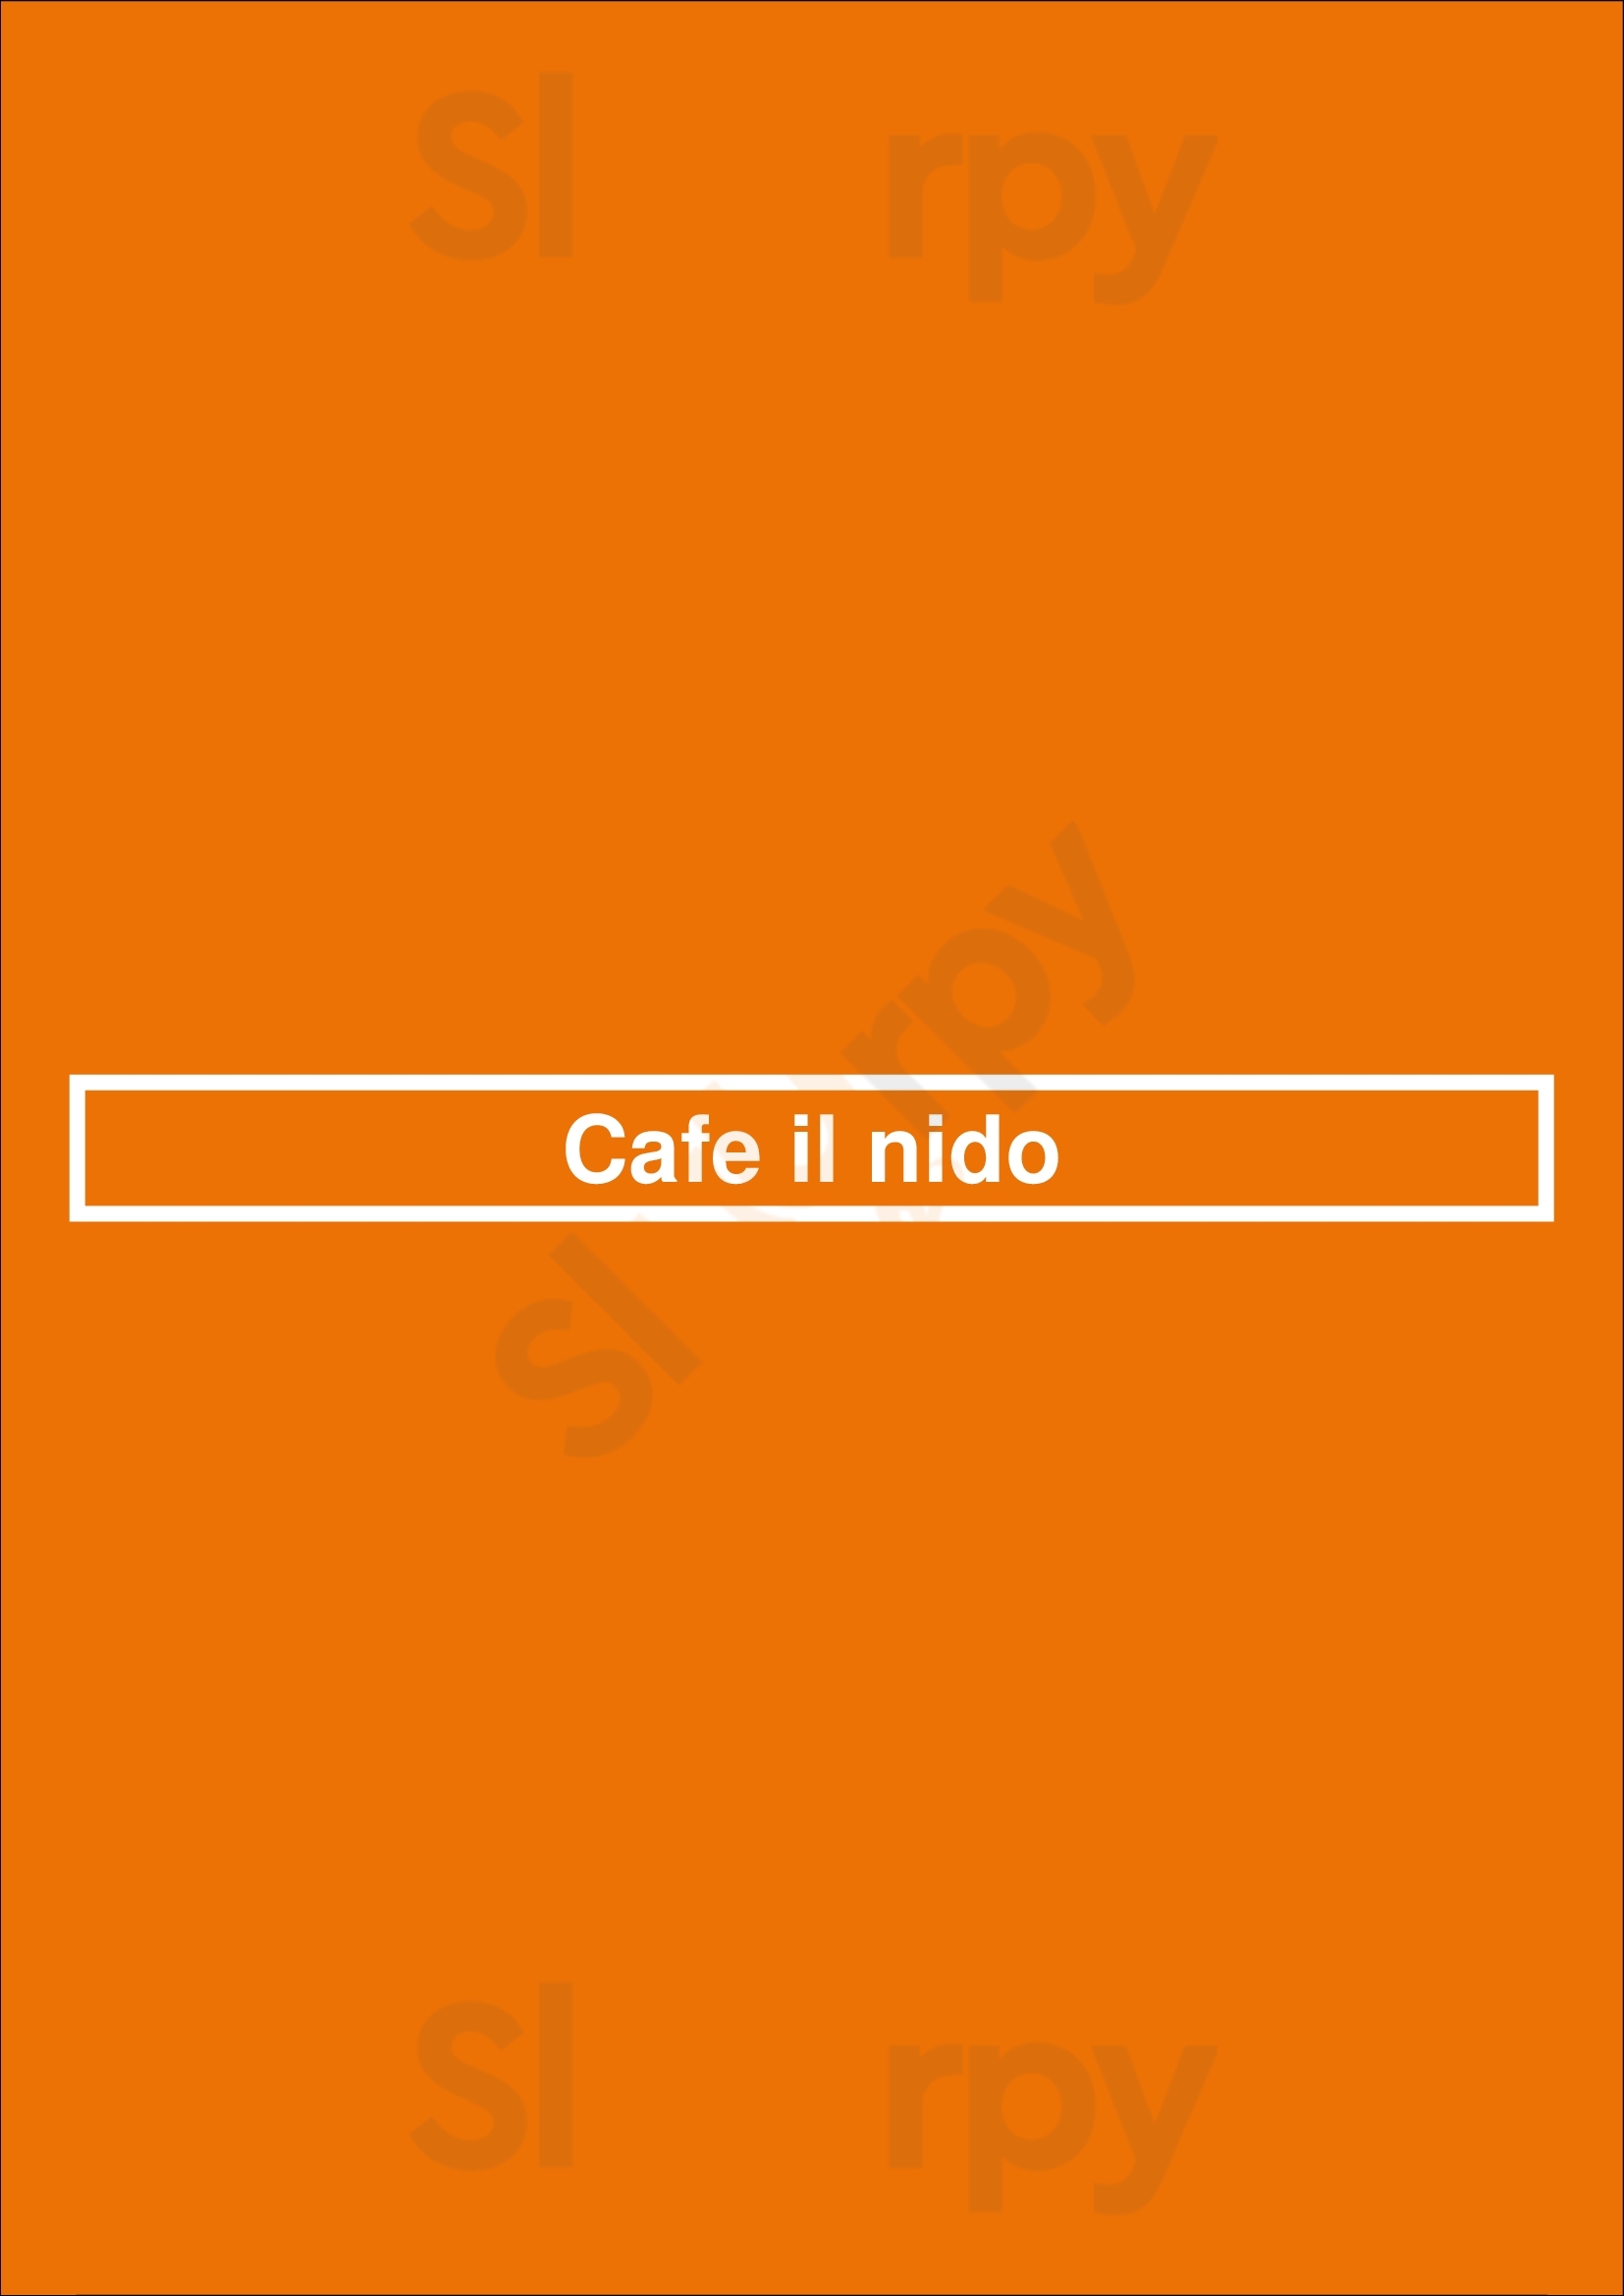 Cafe Il Nido Vancouver Menu - 1